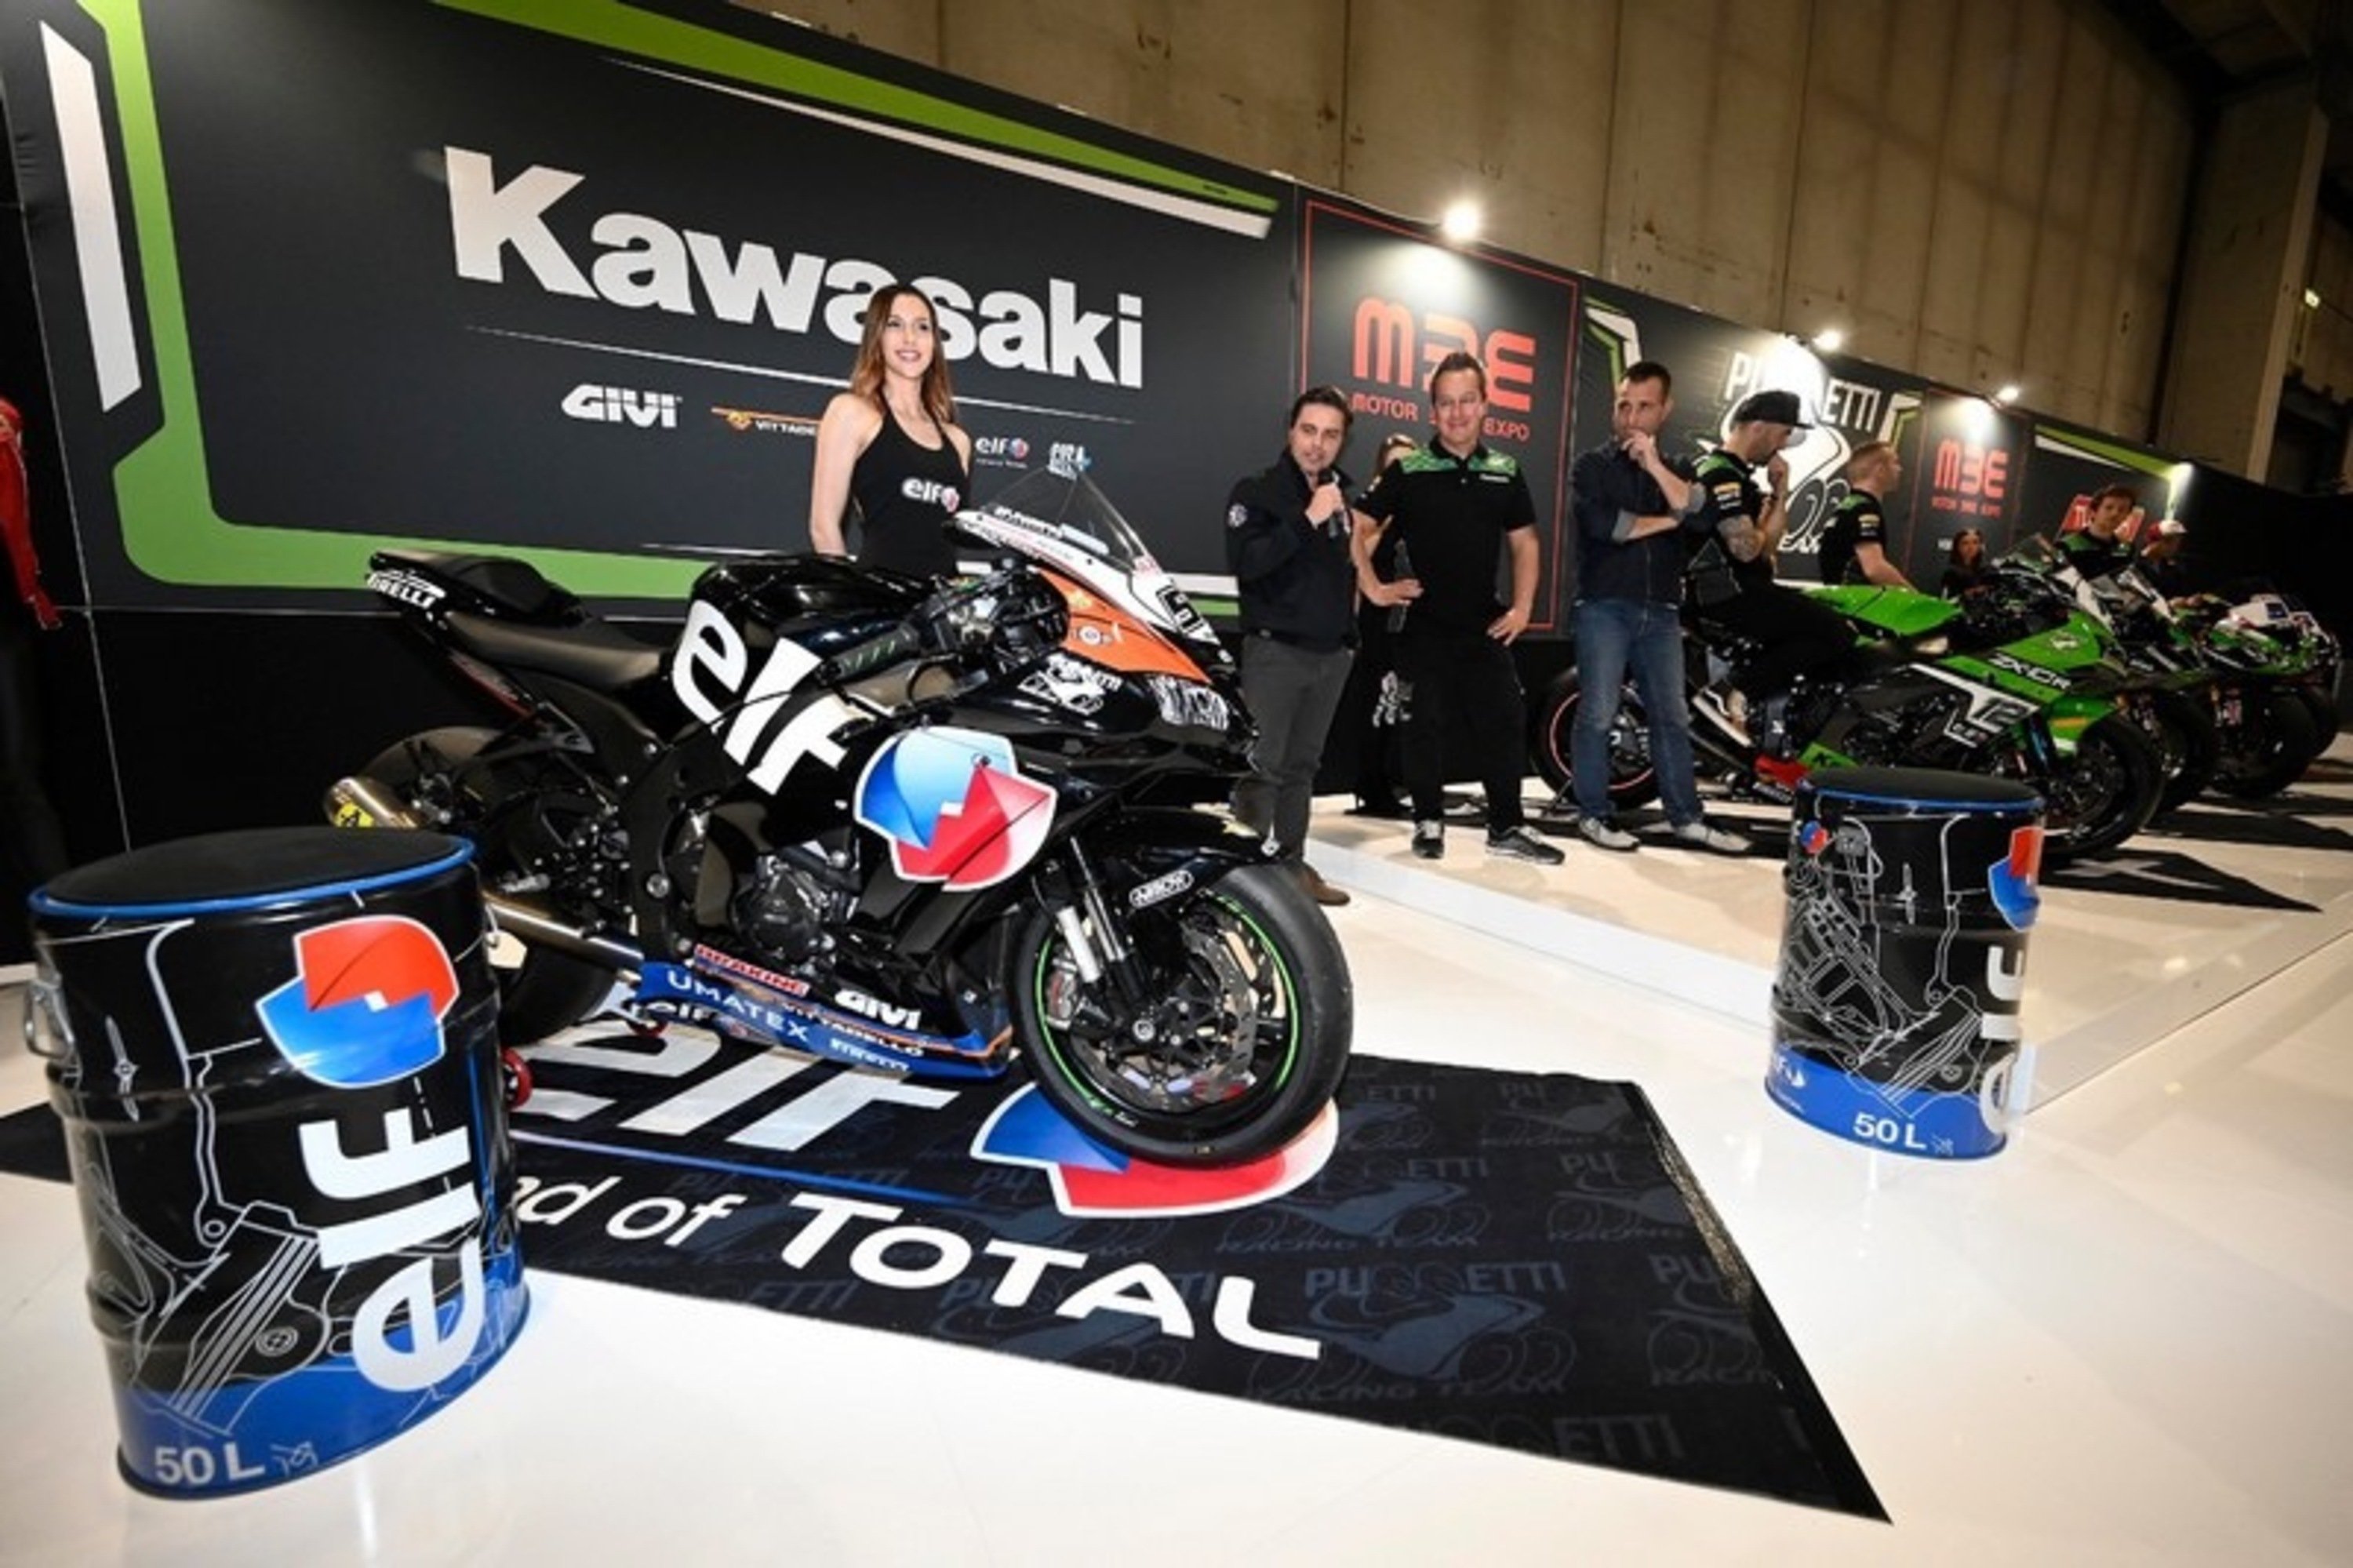 Presentato all' MBE di Verona il Kawasaki Puccetti Racing 2020